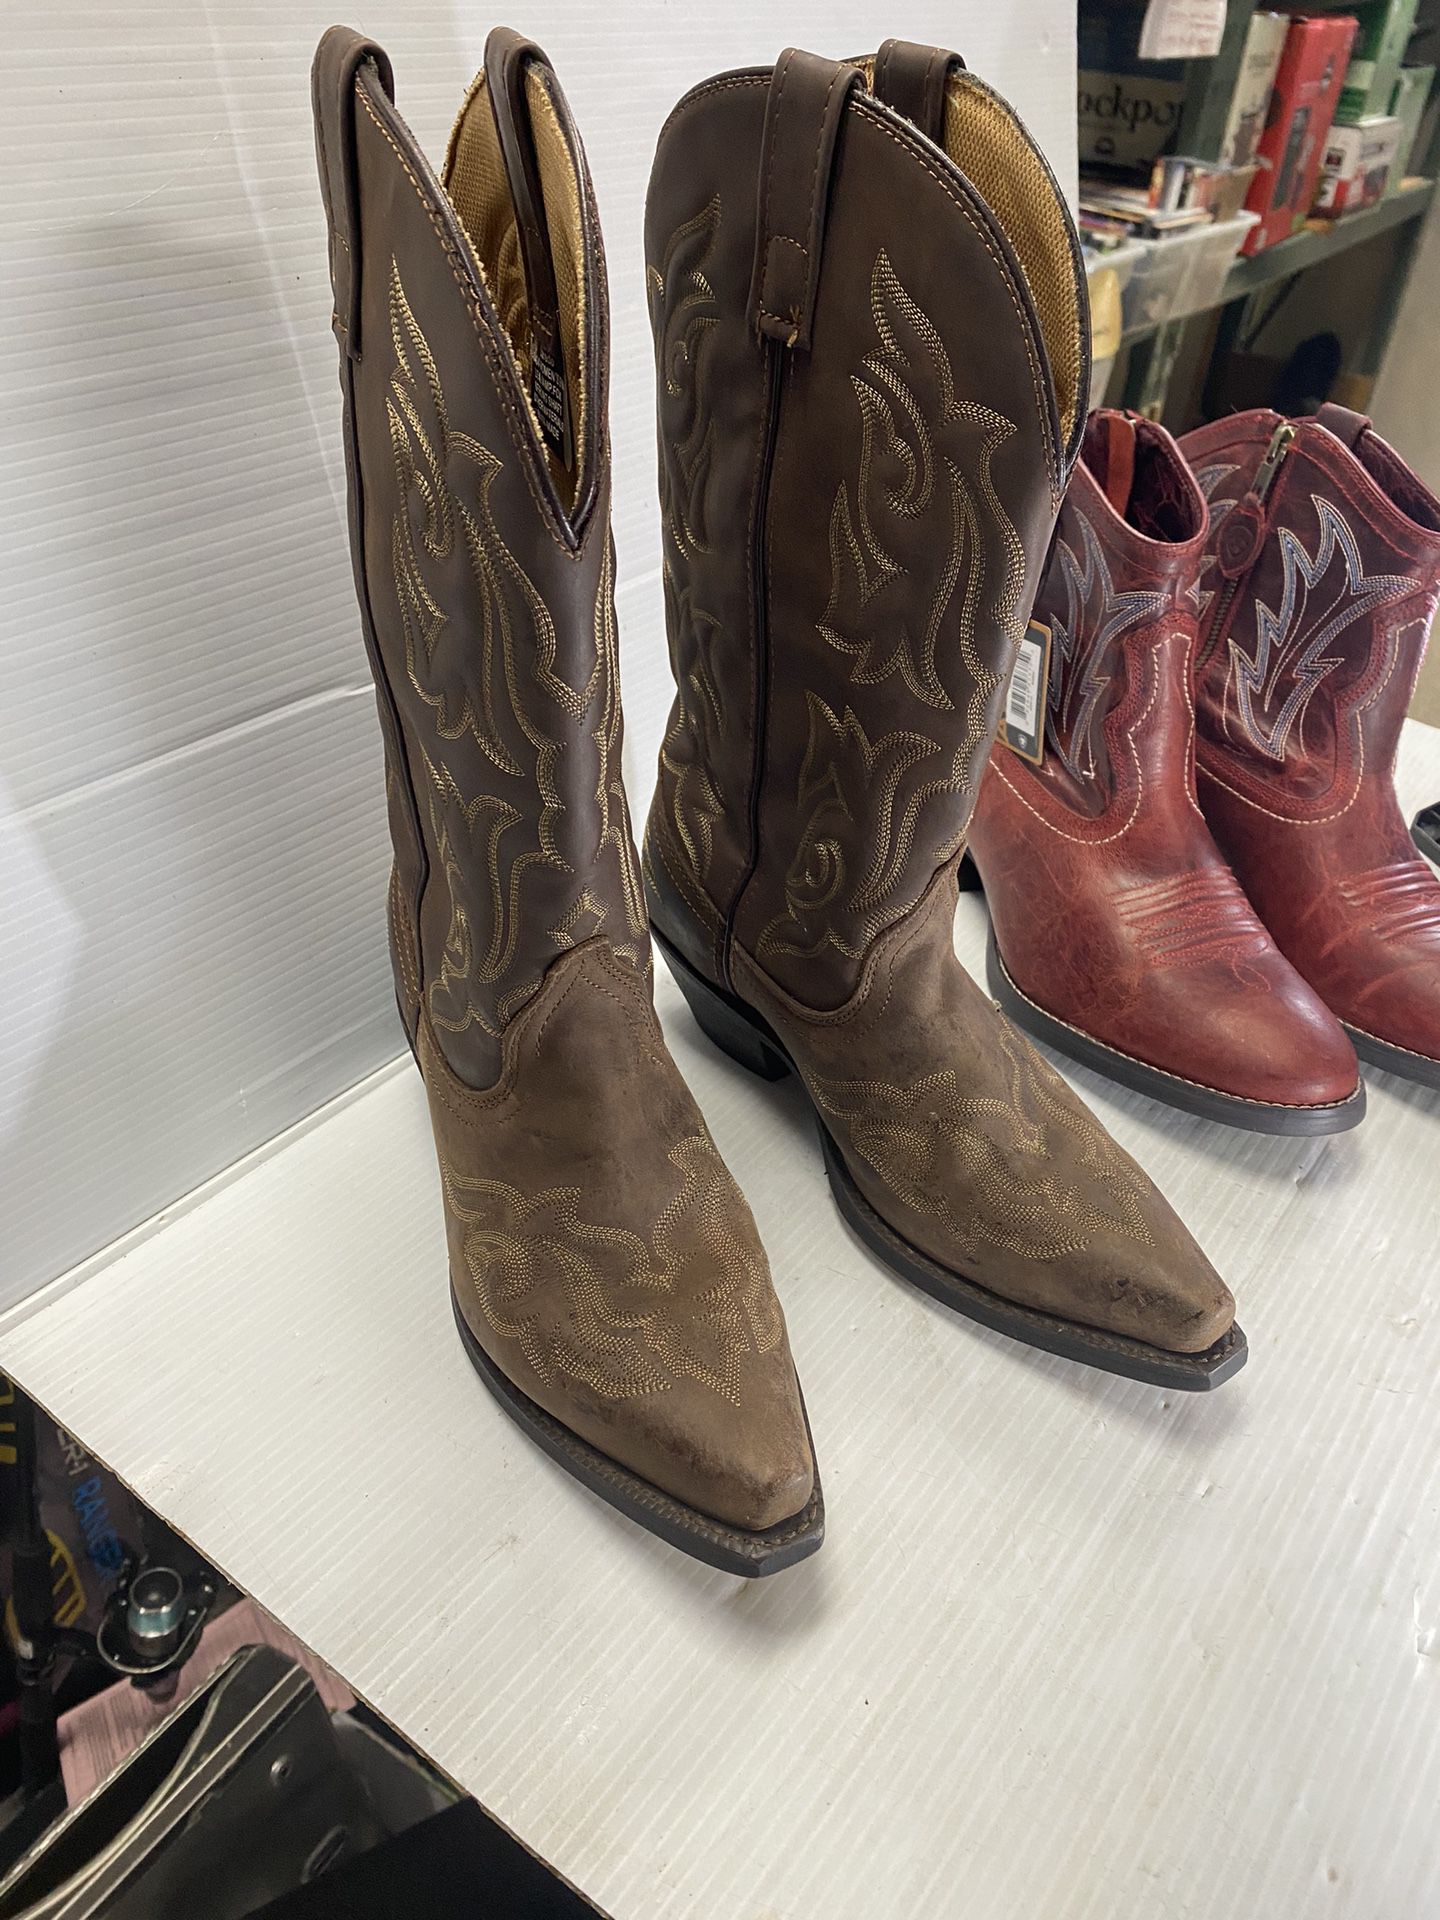 Cow Boy Boots Lot Of 2 Laredo 5404 Woman’s Ariat Style 10011912 Description On Slides 100$